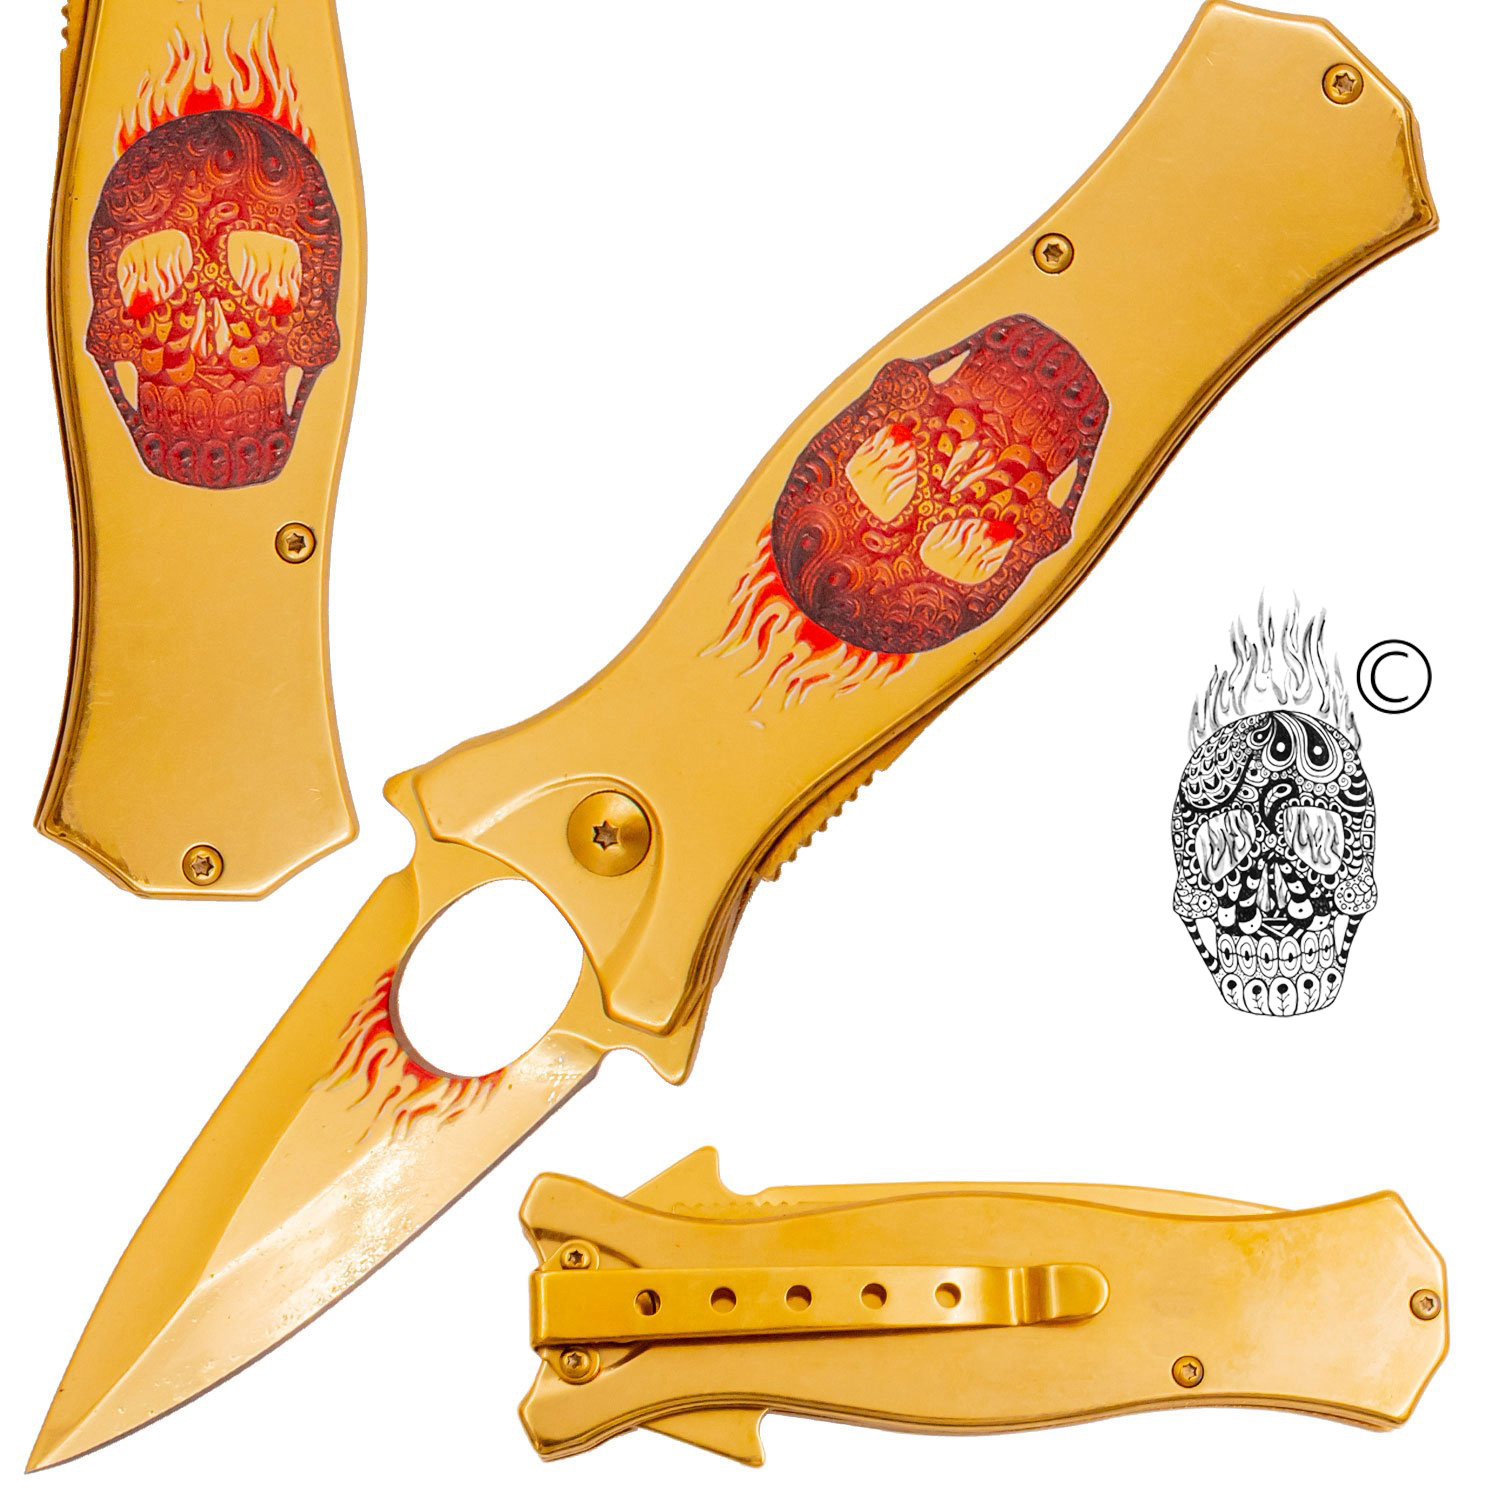 7.5 Inch Golden Ticket Spring Assisted Knife Flaming Sugar Skull (Red and Orange)